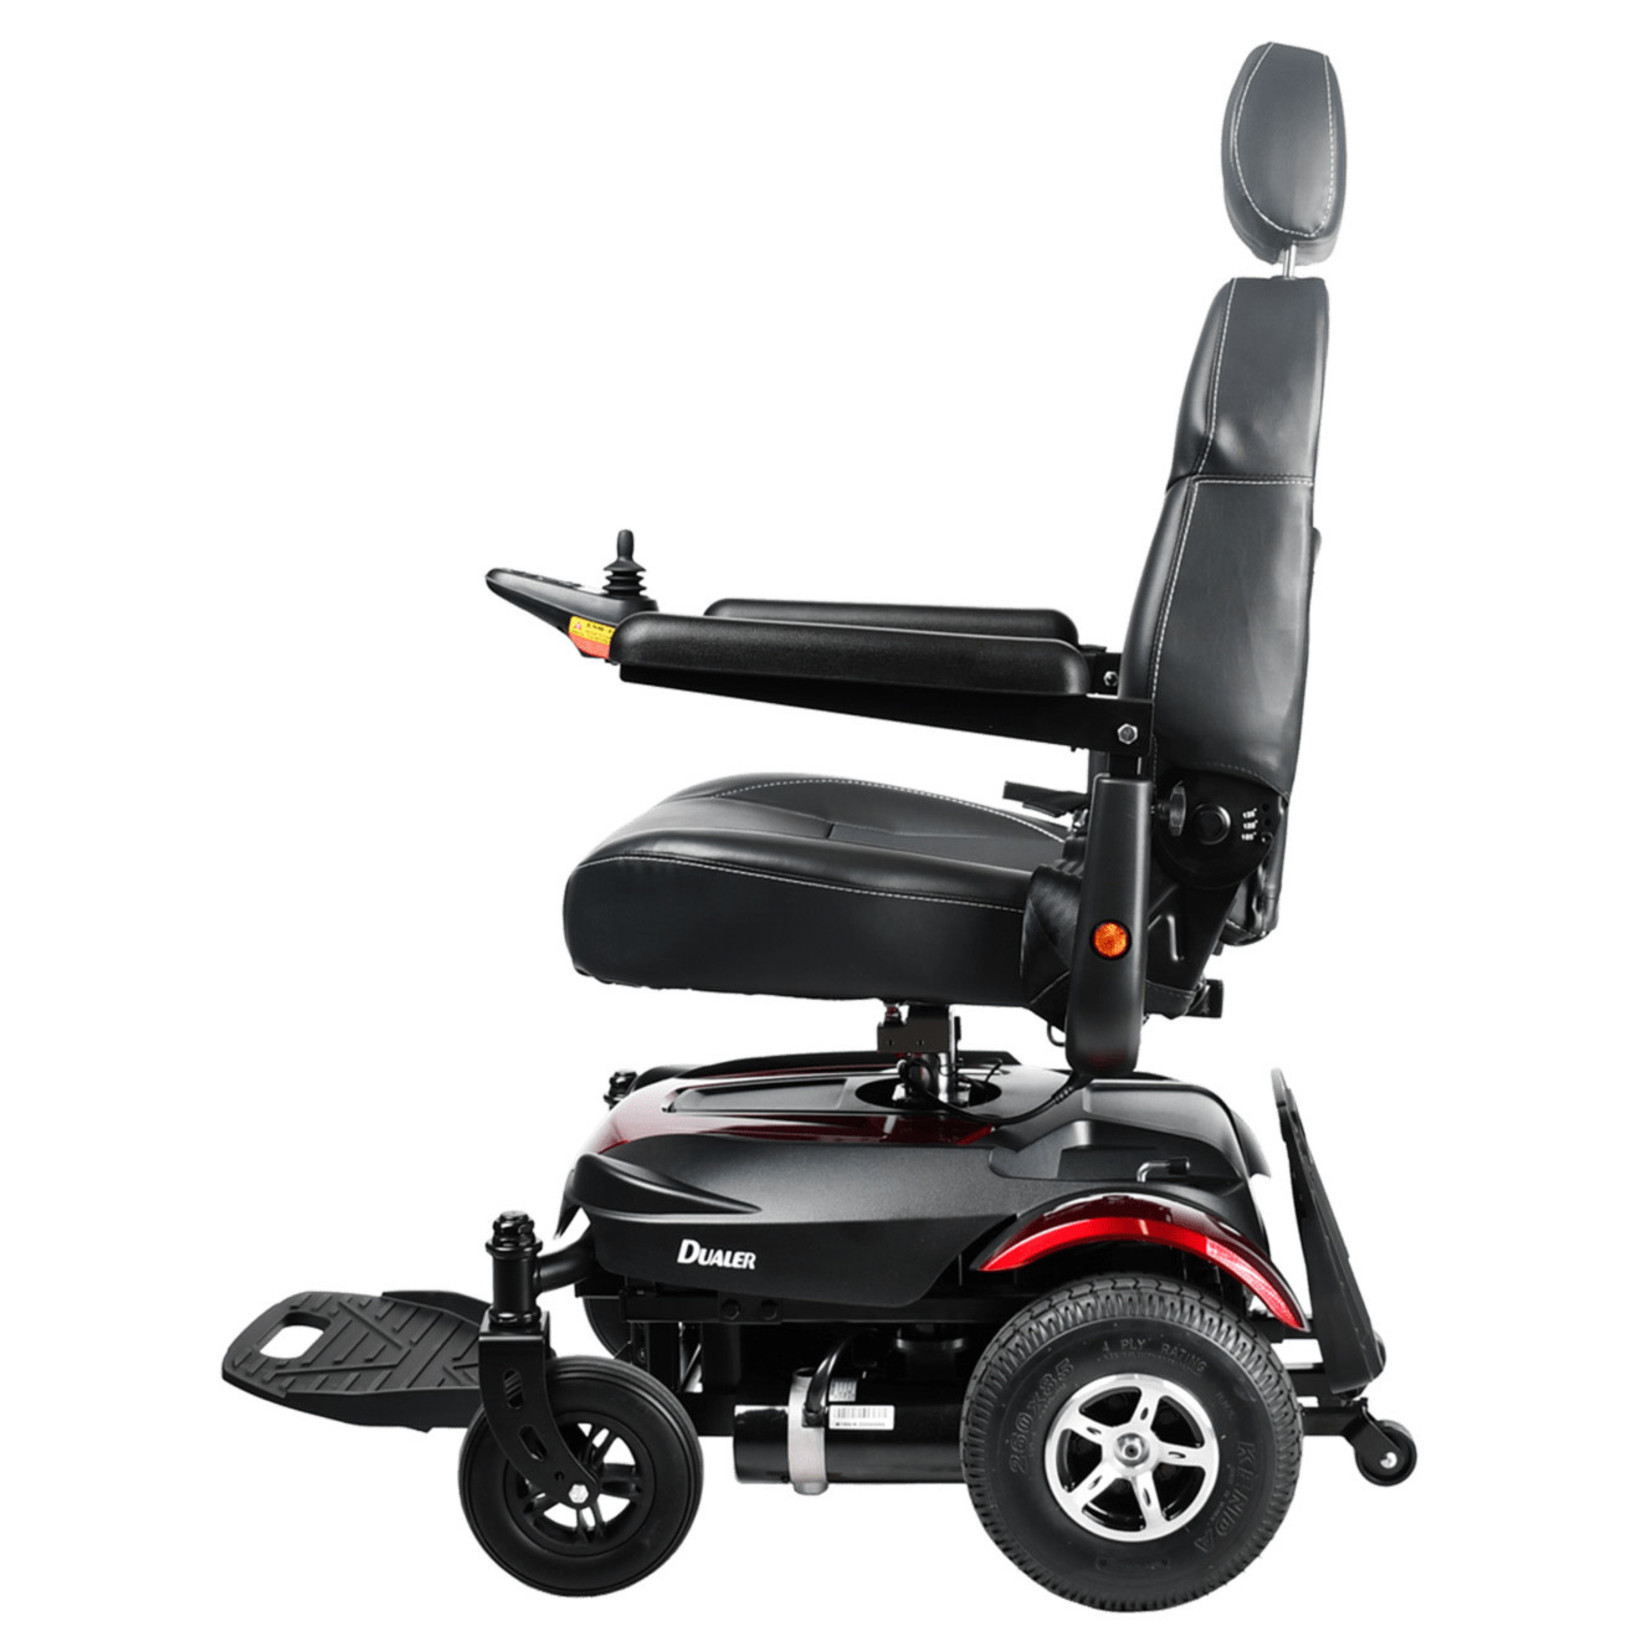 Gel Supreme Wheelchair Seat Cushion, 18 inch x 16 inch x 3 inch-1 Each